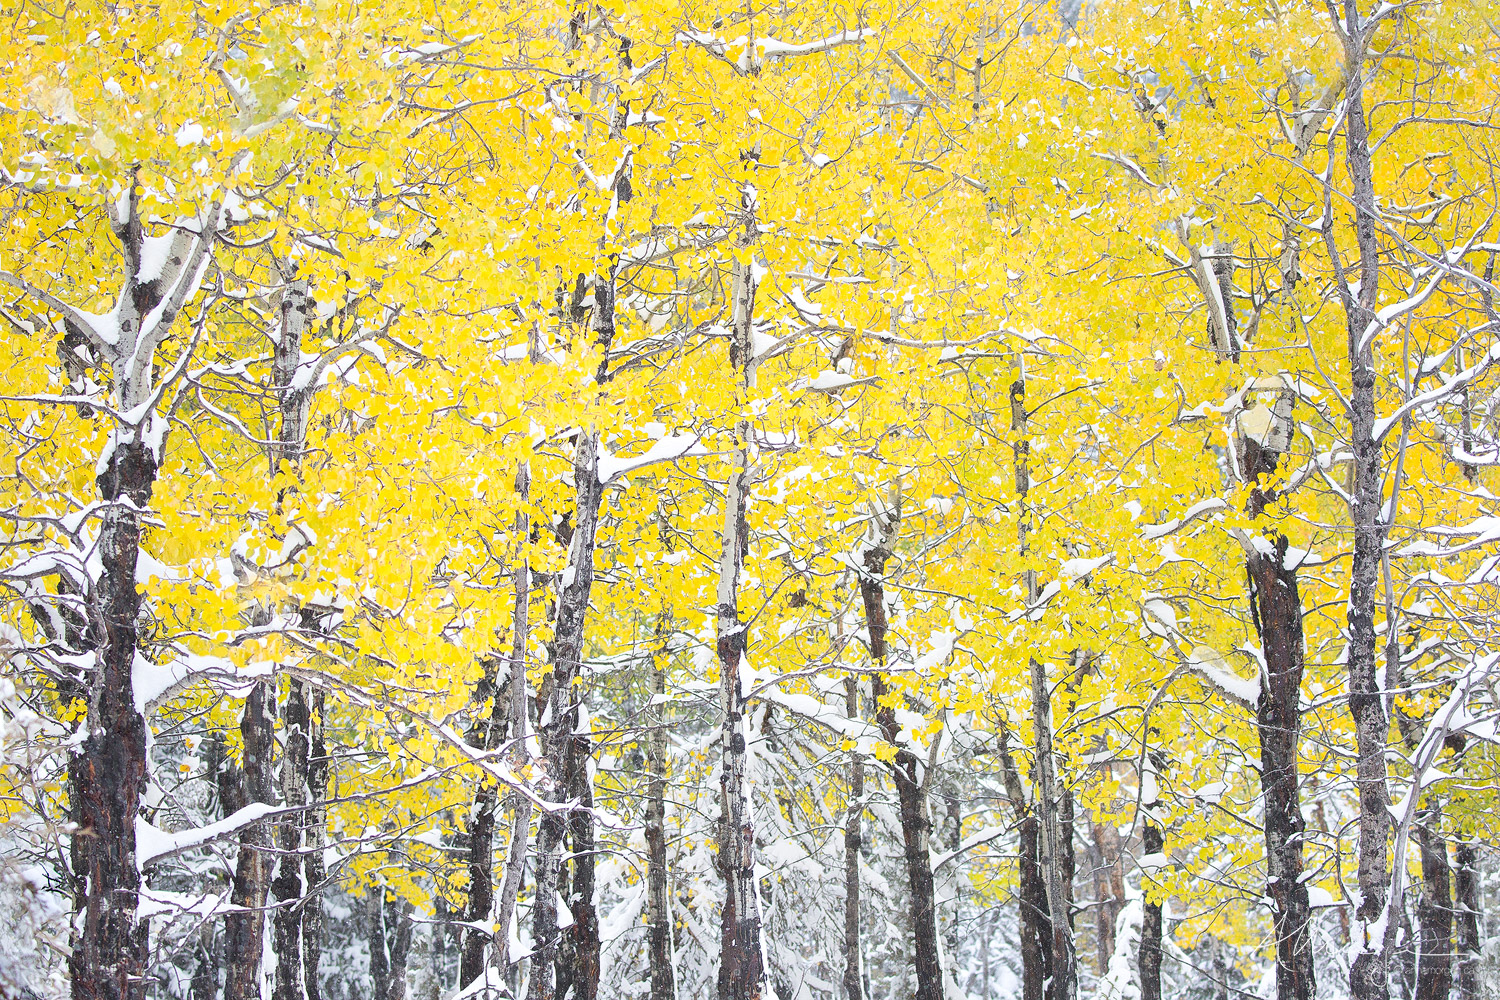 Snow laden trees with bright yellow Autumn foliage